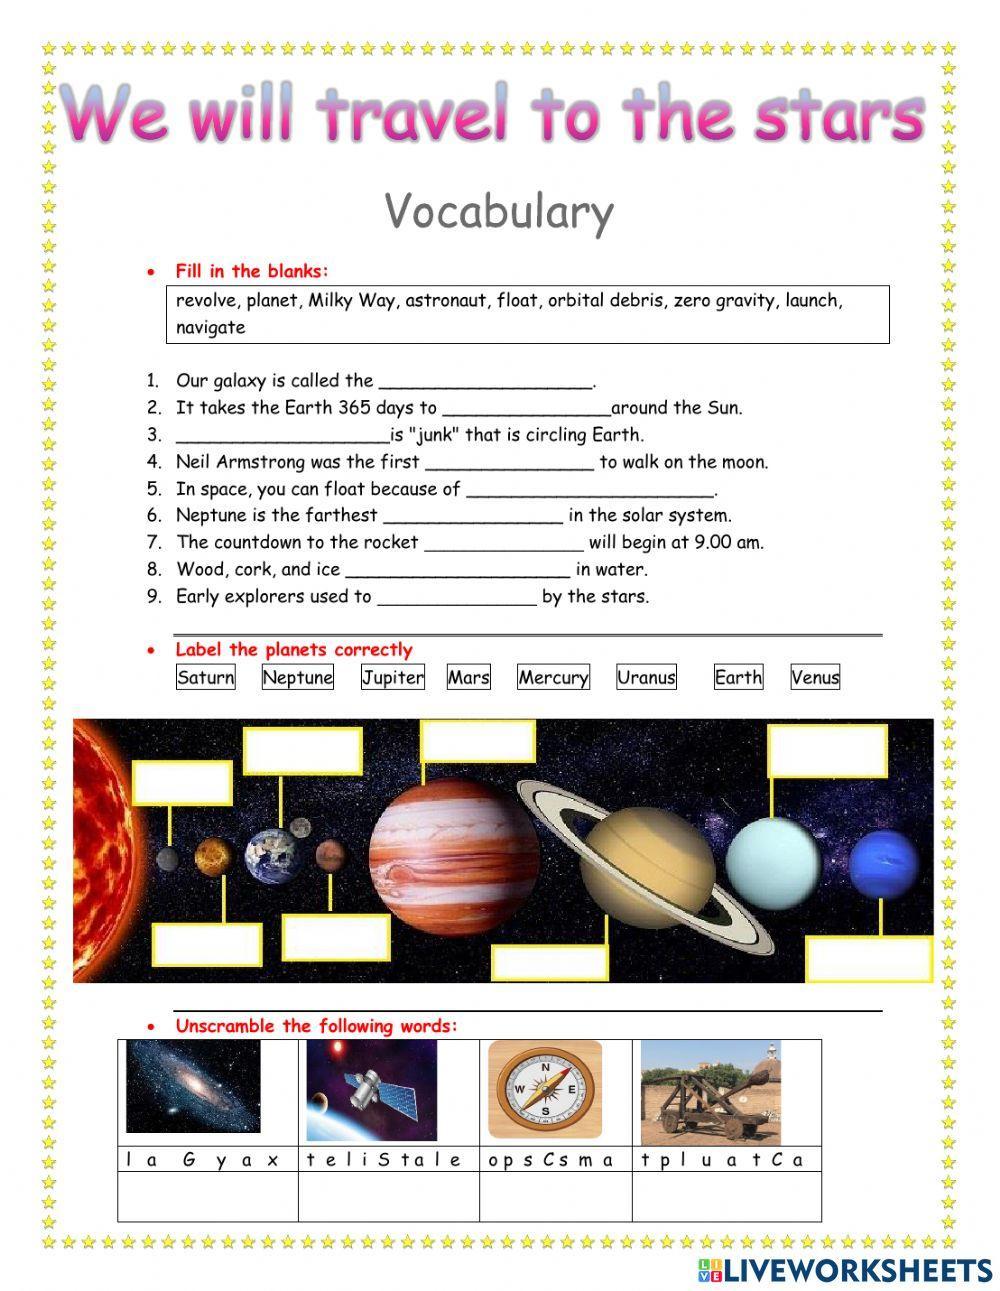 Galaxy vocabulary - words